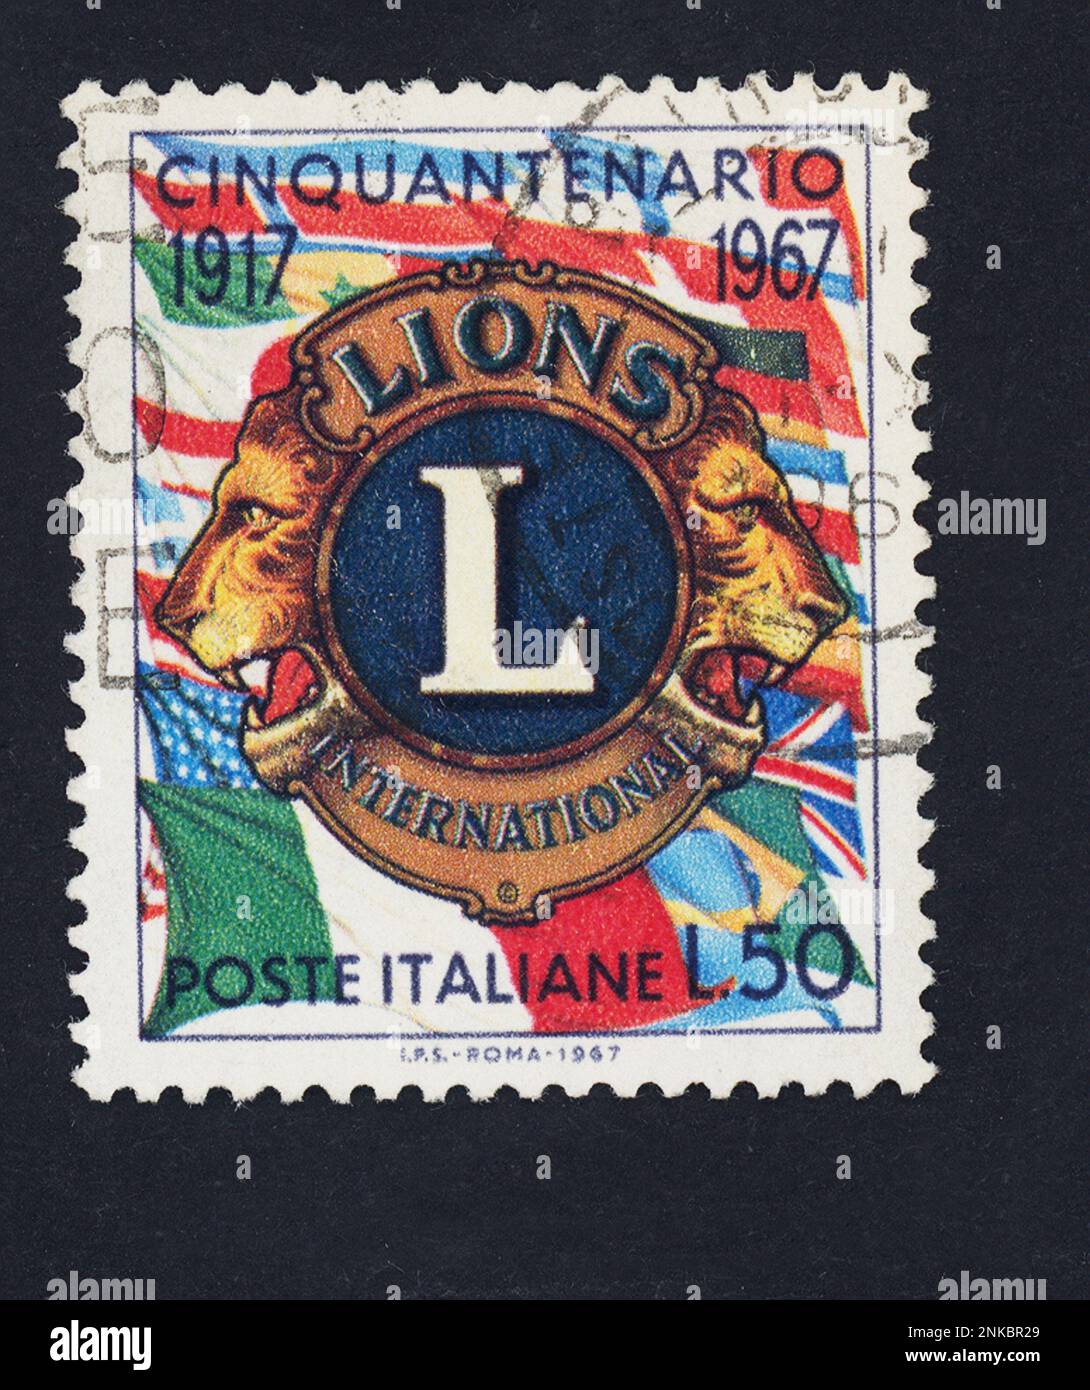 der italian LIONS CLUB International . Post Stamp Timber vom italienischen Postdienst 1967 - POSTE ITALIANE - francobollo commemorativo --- Archivio GBB Stockfoto